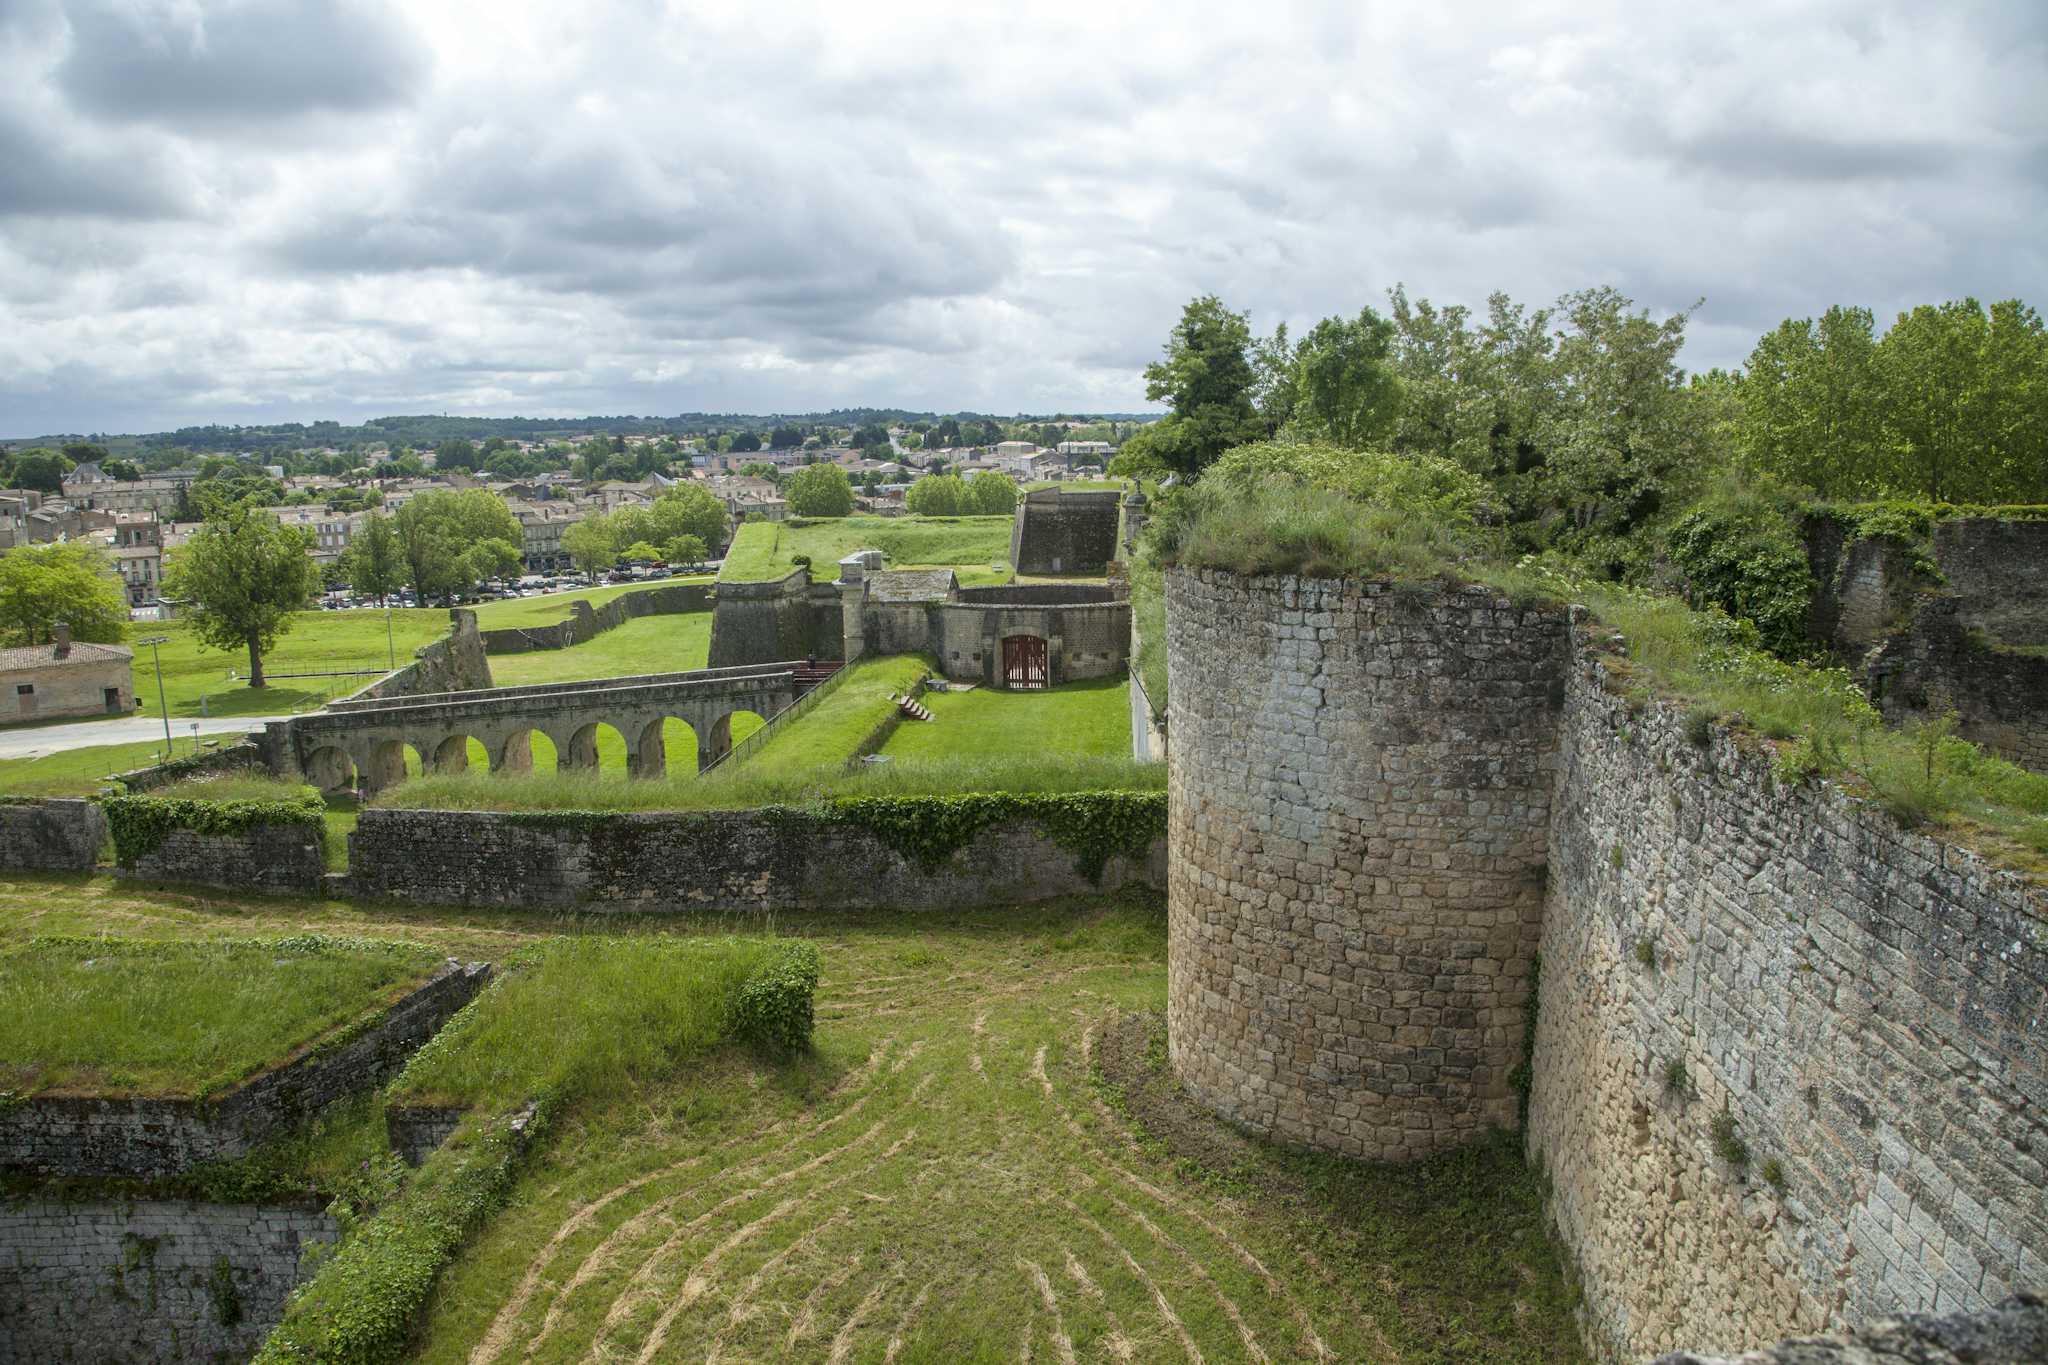 The Blaye Citadel